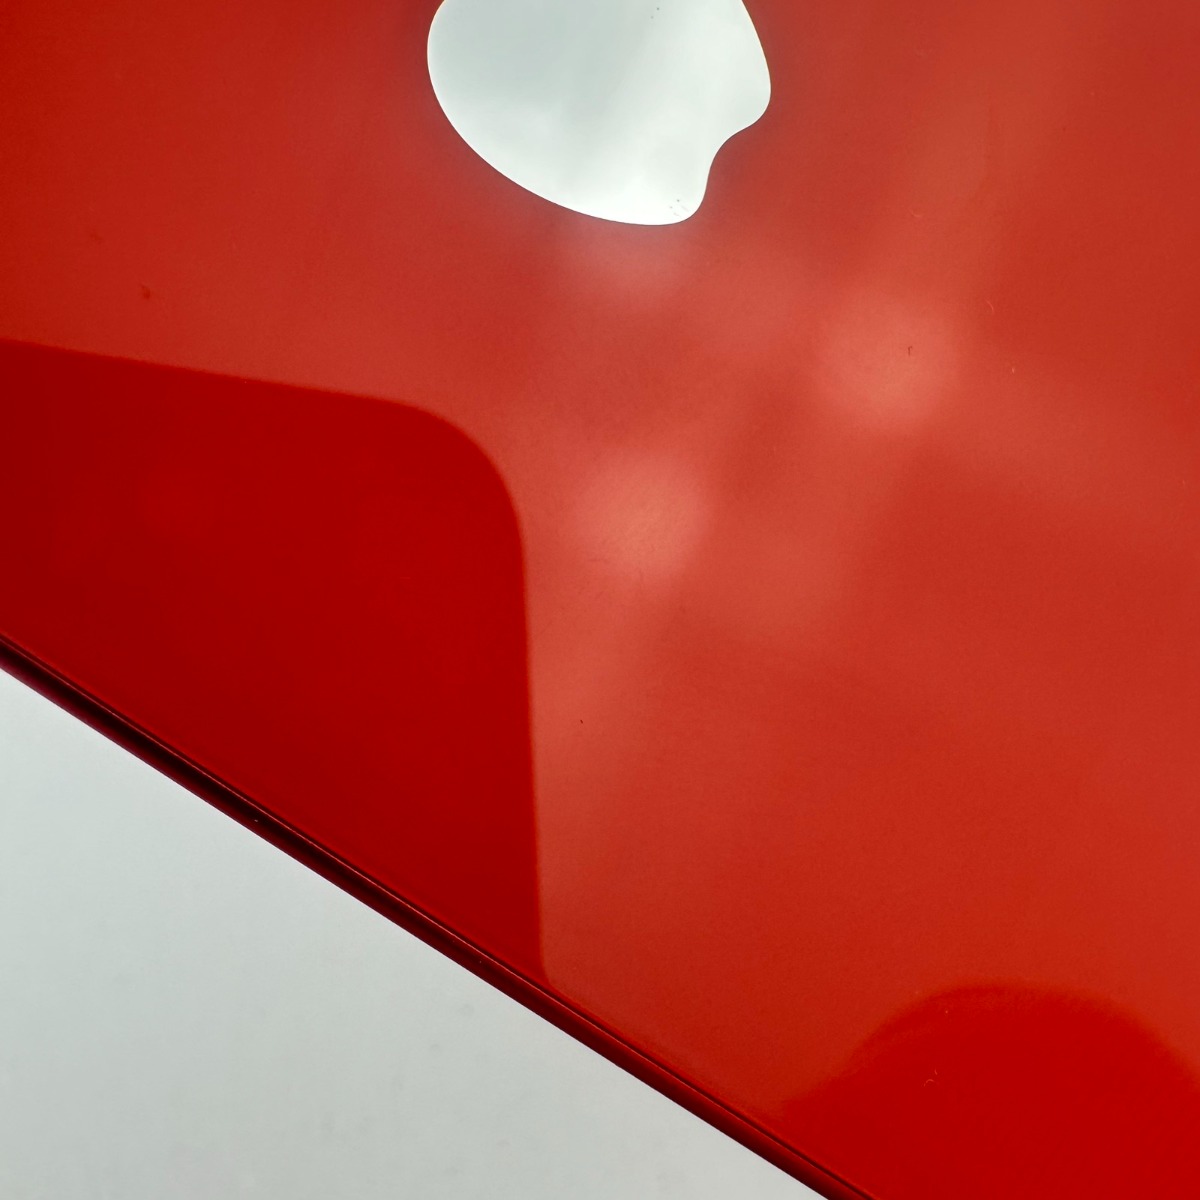 Apple iPhone 12 128GB Red Б/У №1410 (стан 8/10)